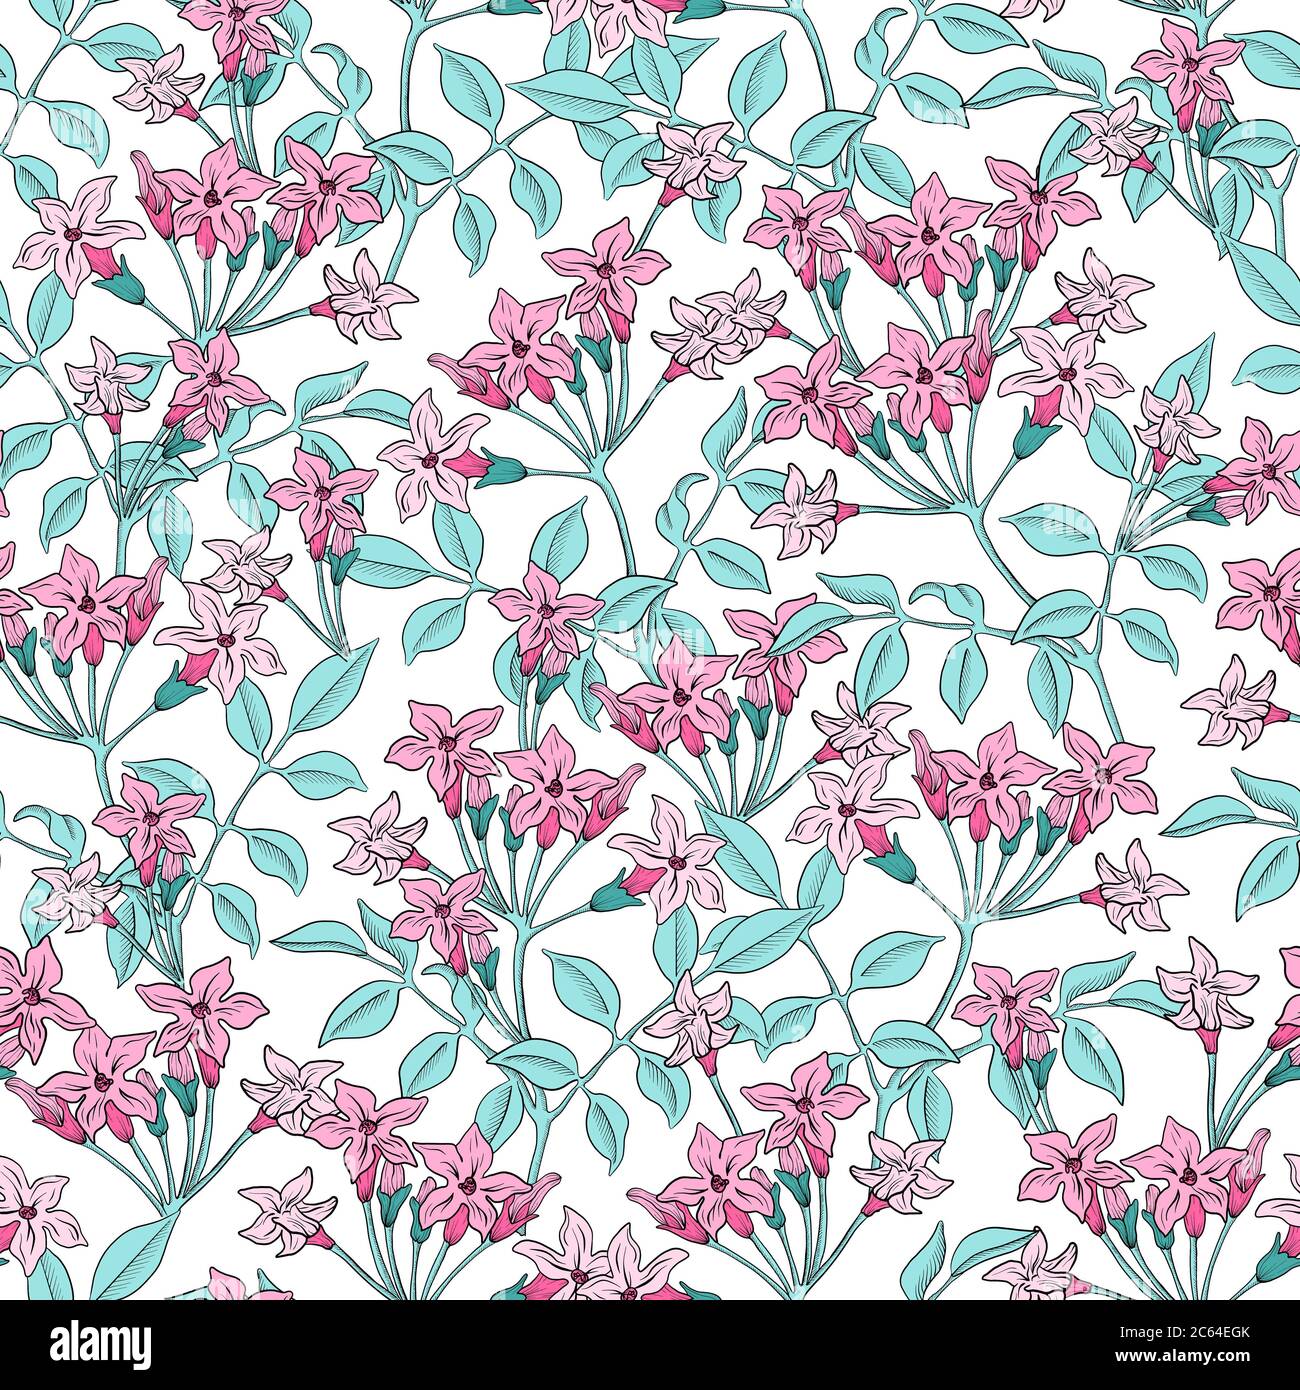 Pink Jasmine flower hand-drawn line art floral seamless pattern Stock Photo  - Alamy